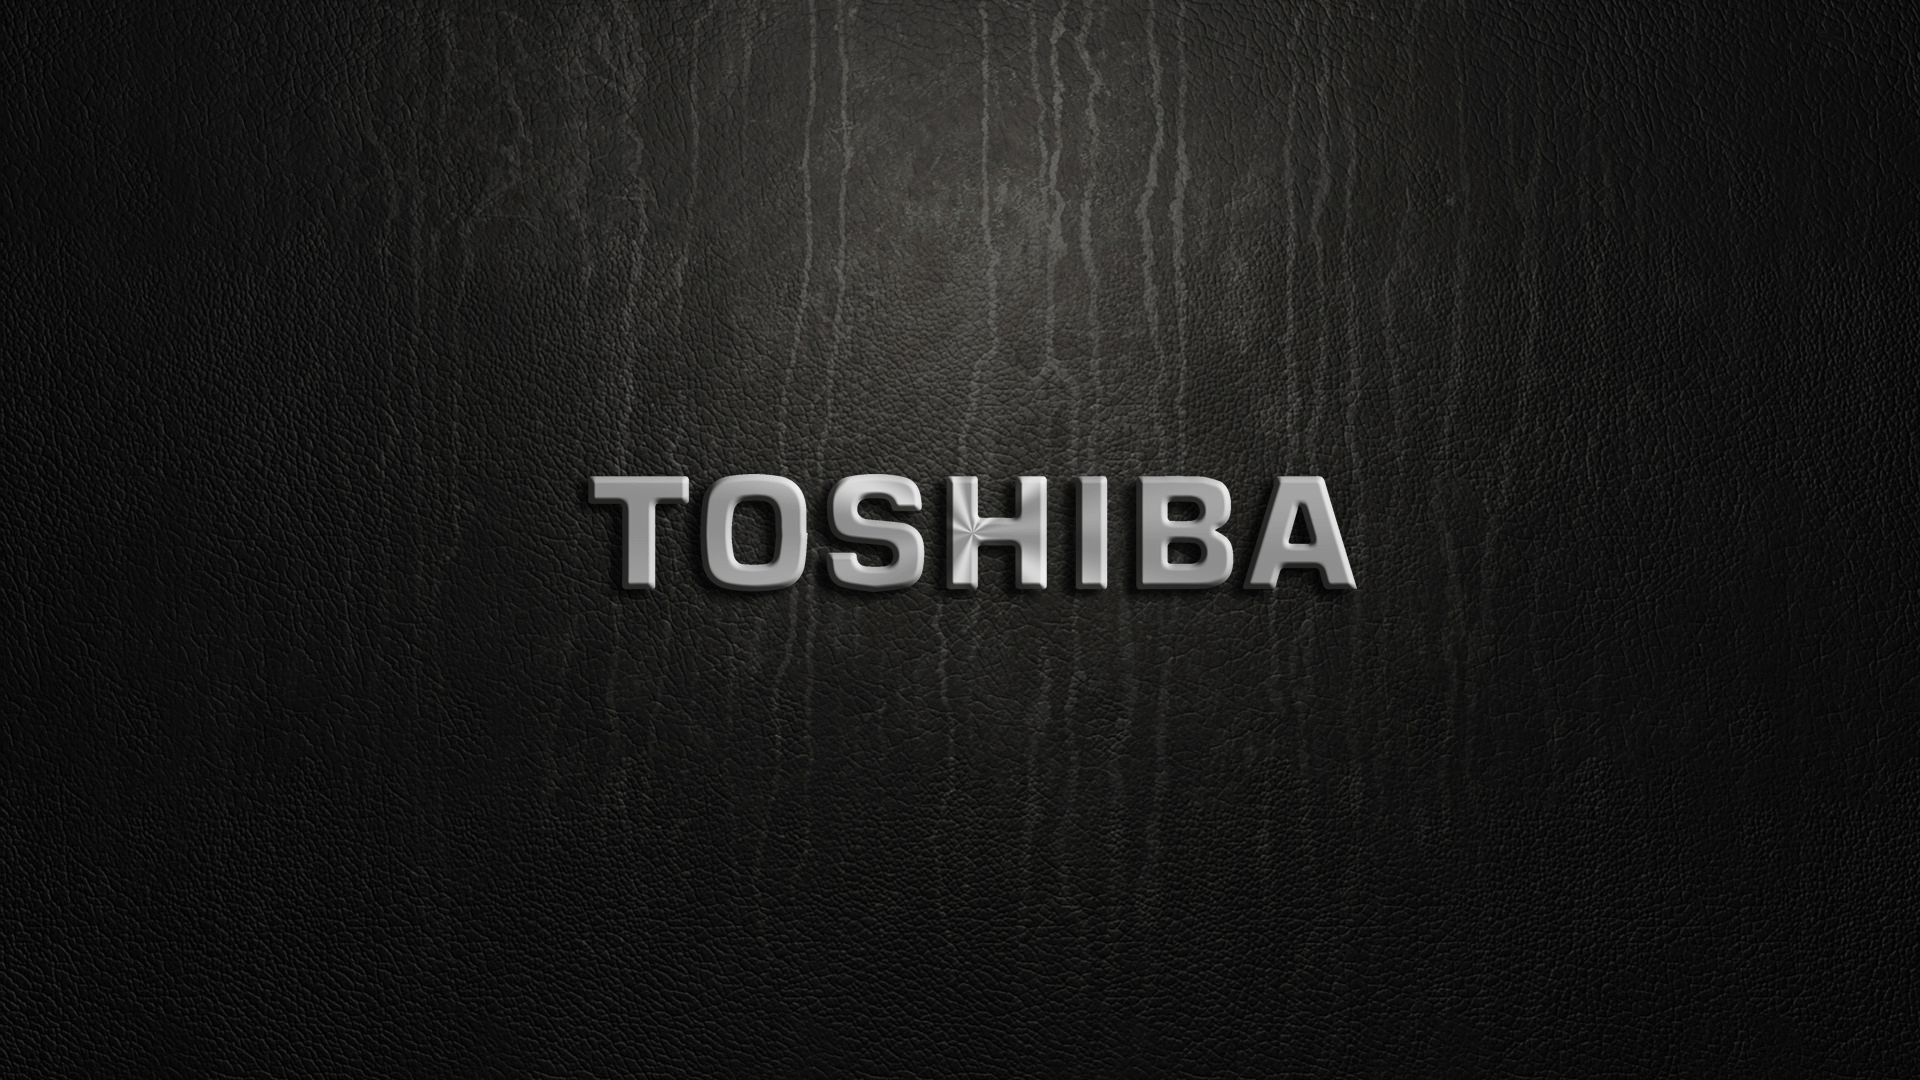 Toshiba’da Sarsıntıların Bilançosu Ağır Oldu